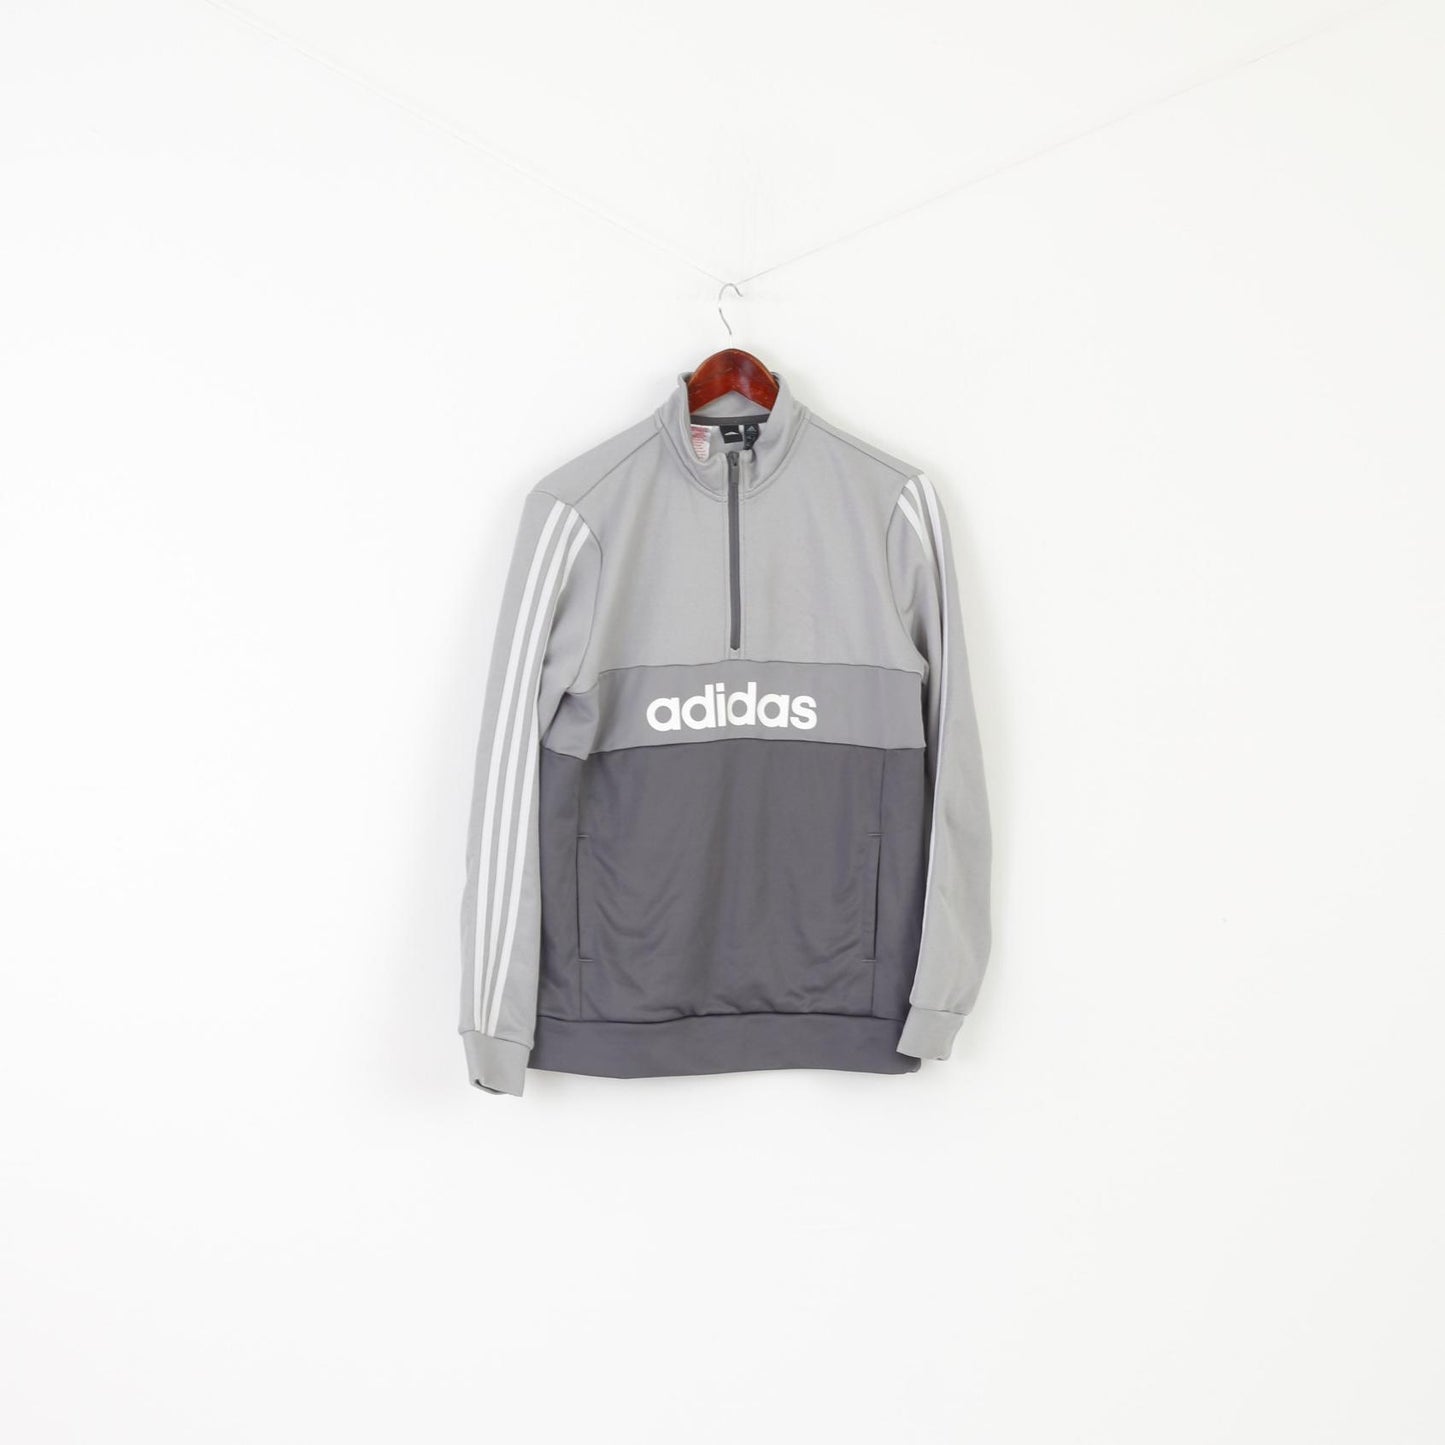 Adidas Youth 15-16 Age Shirt Gray Aeroready Zip Neck Sportswear Primegreen Top